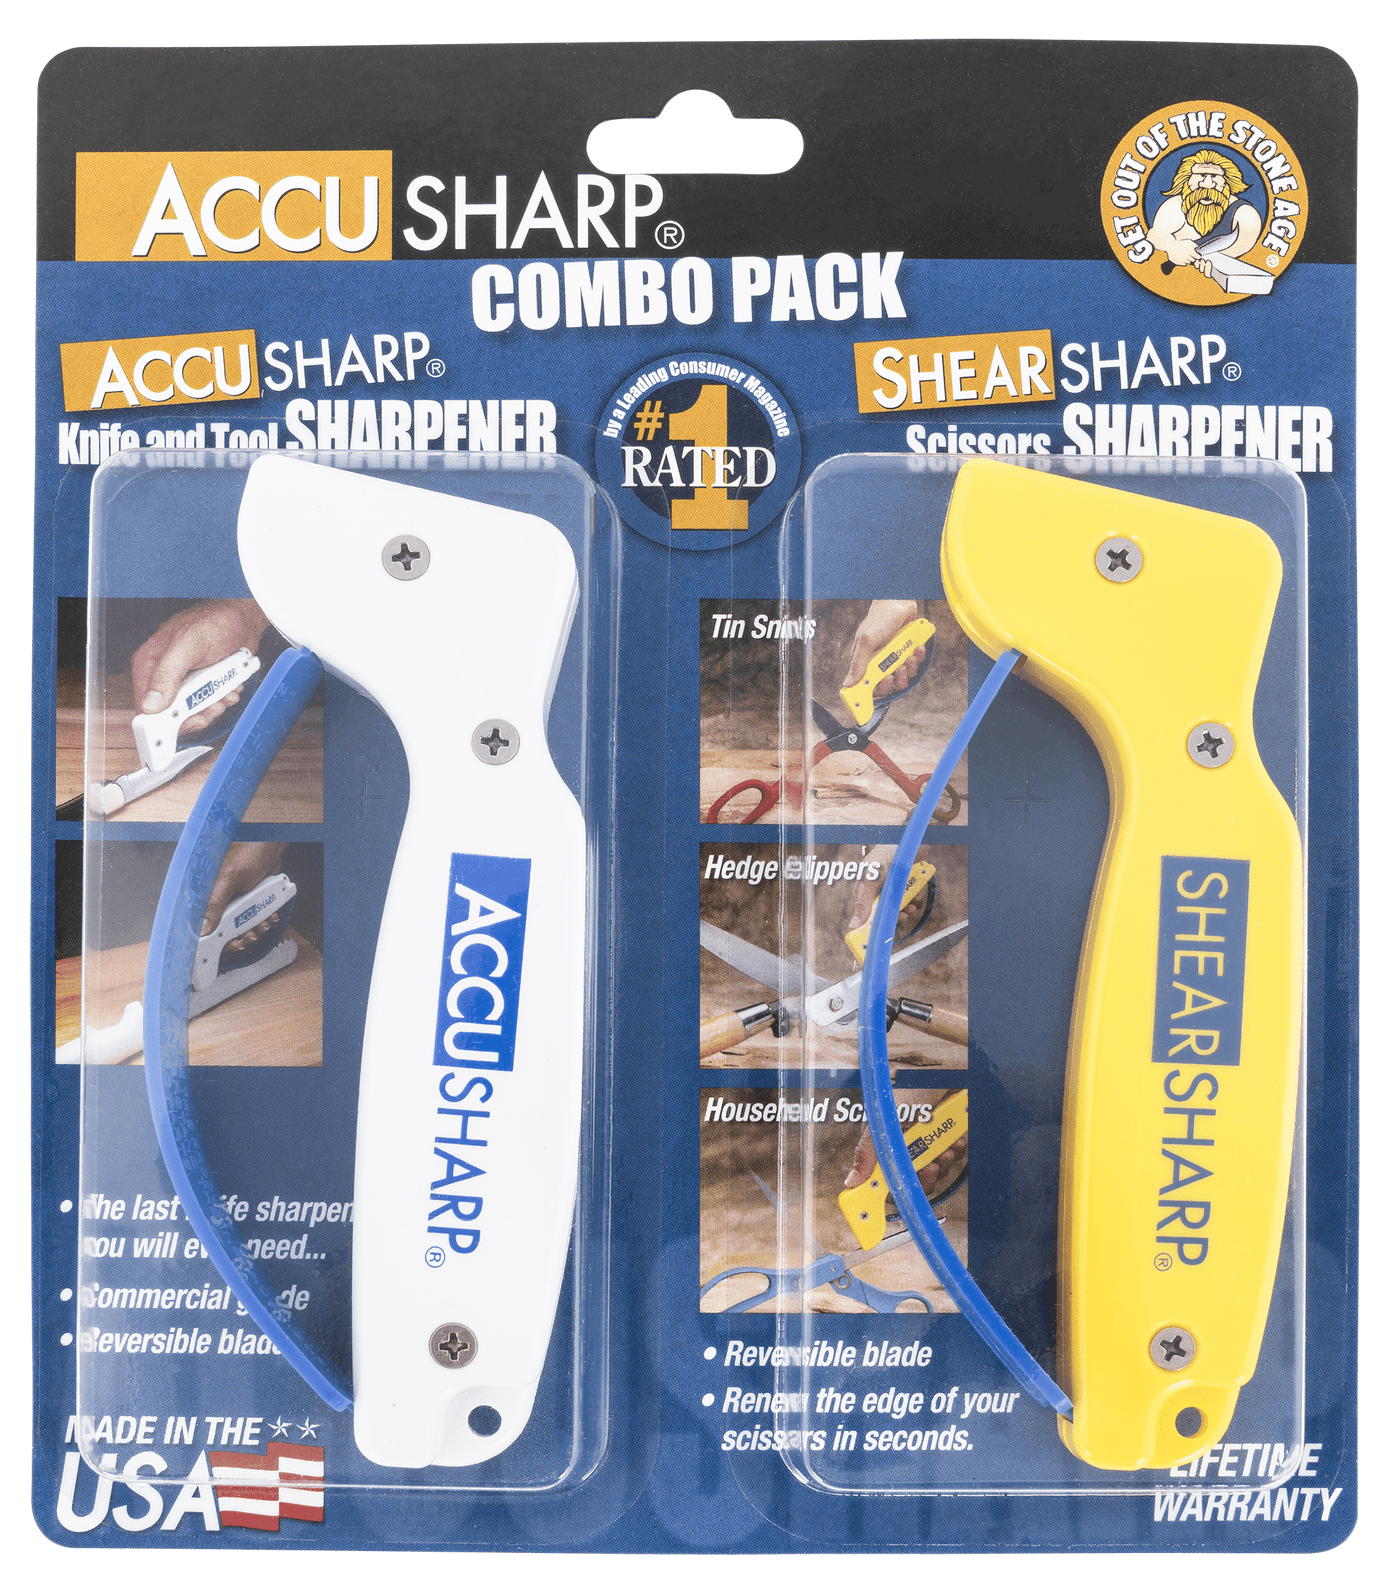 Accusharp Accusharp Shearsharp, Fpi 012c  Accusharp/shearsharp Combo Accessories